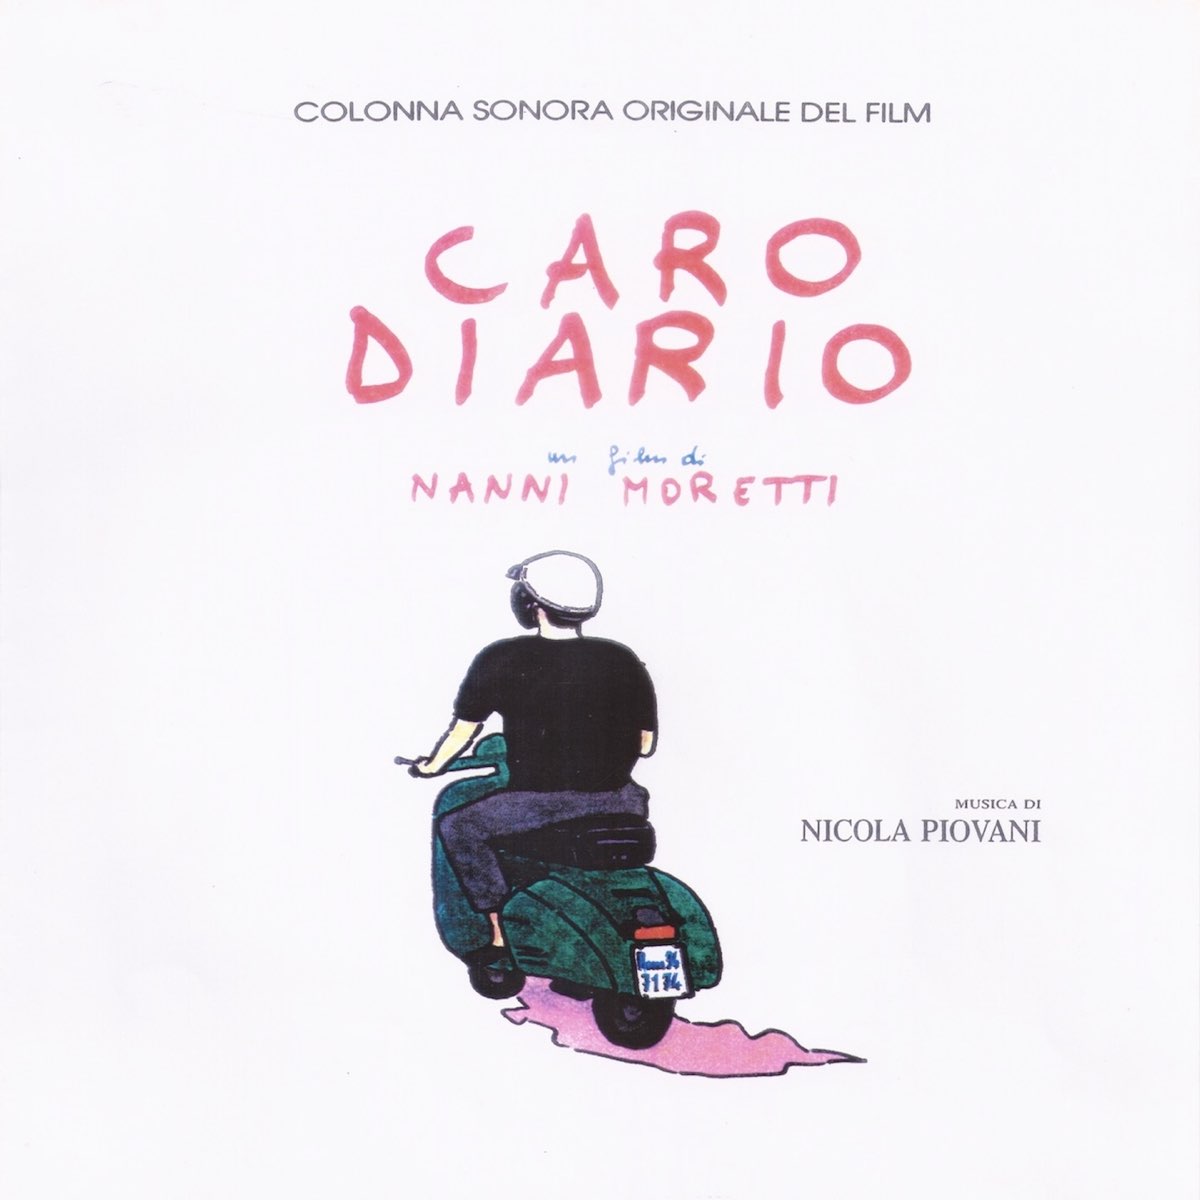 Caro diario (Colonna sonora originale del film) - EP by Nicola Piovani on  Apple Music